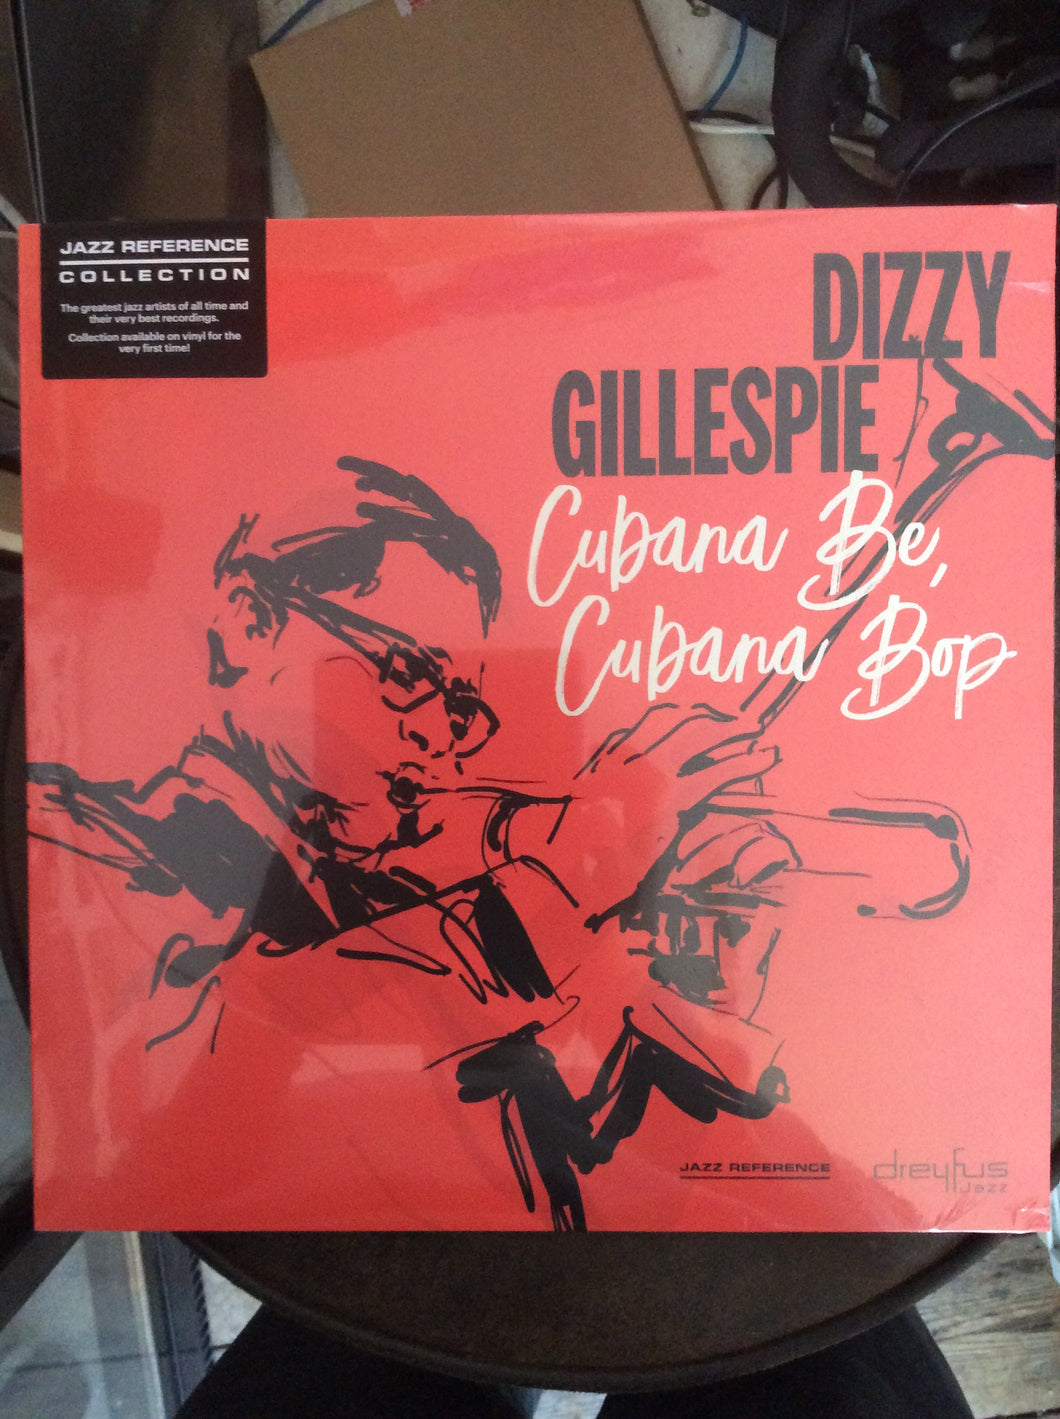 Dizzy Gillespie - Cubana Be, Cubana Bop 